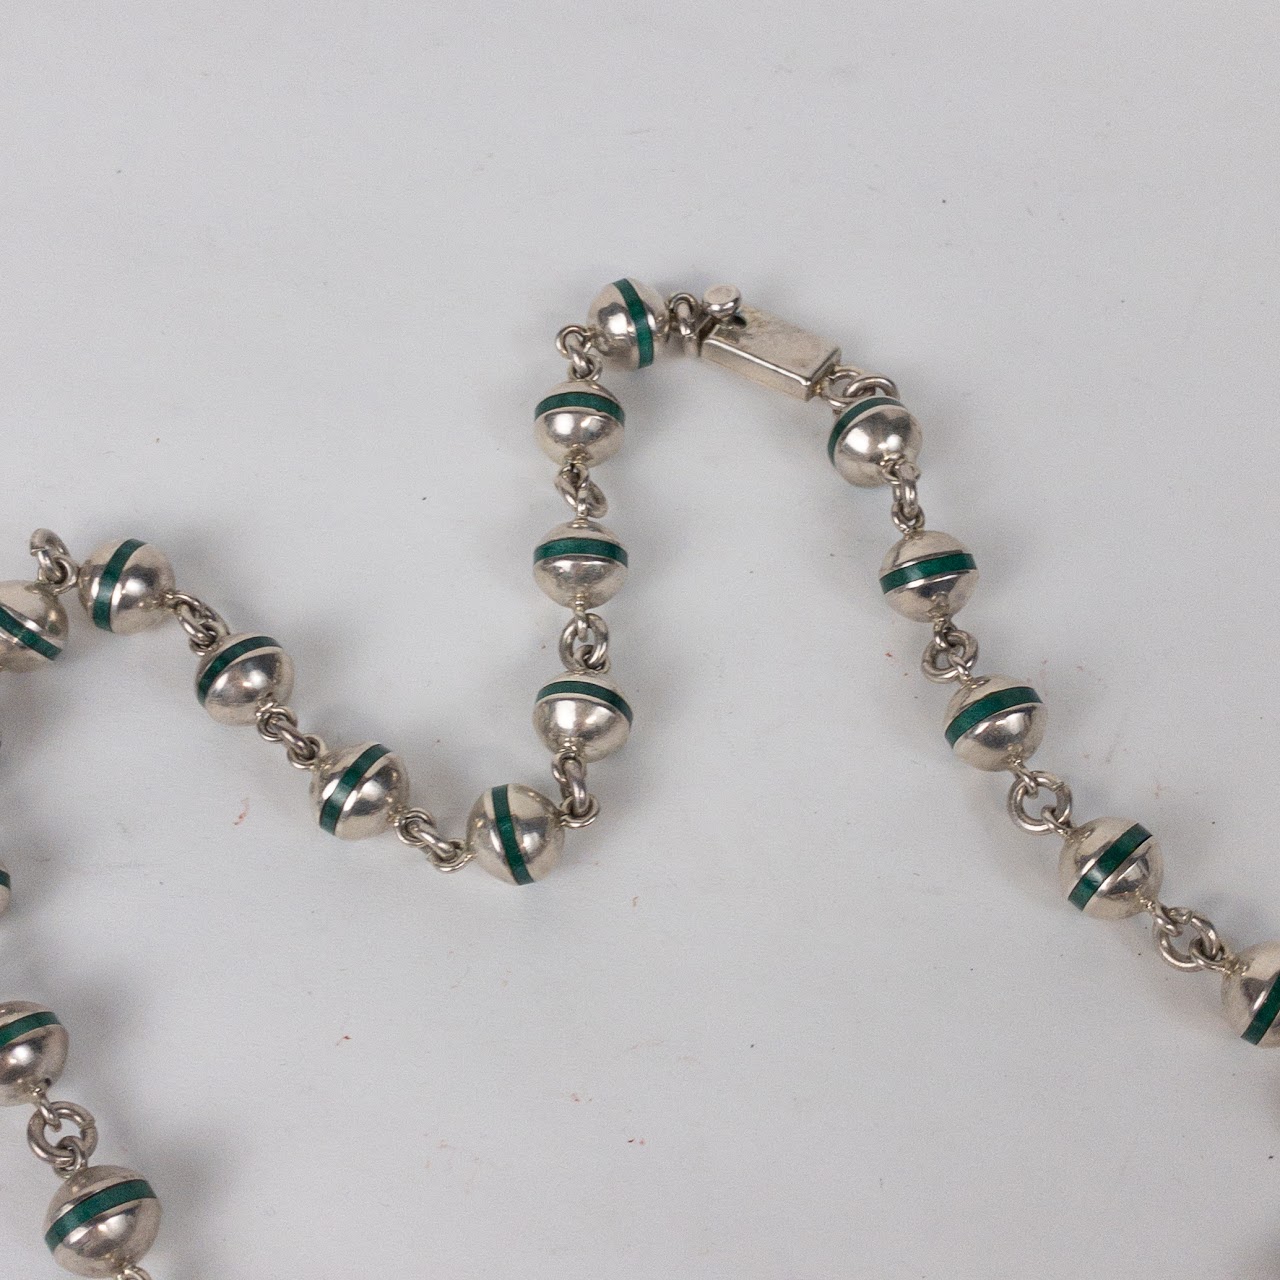 Sterling Silver Split Bead Necklace